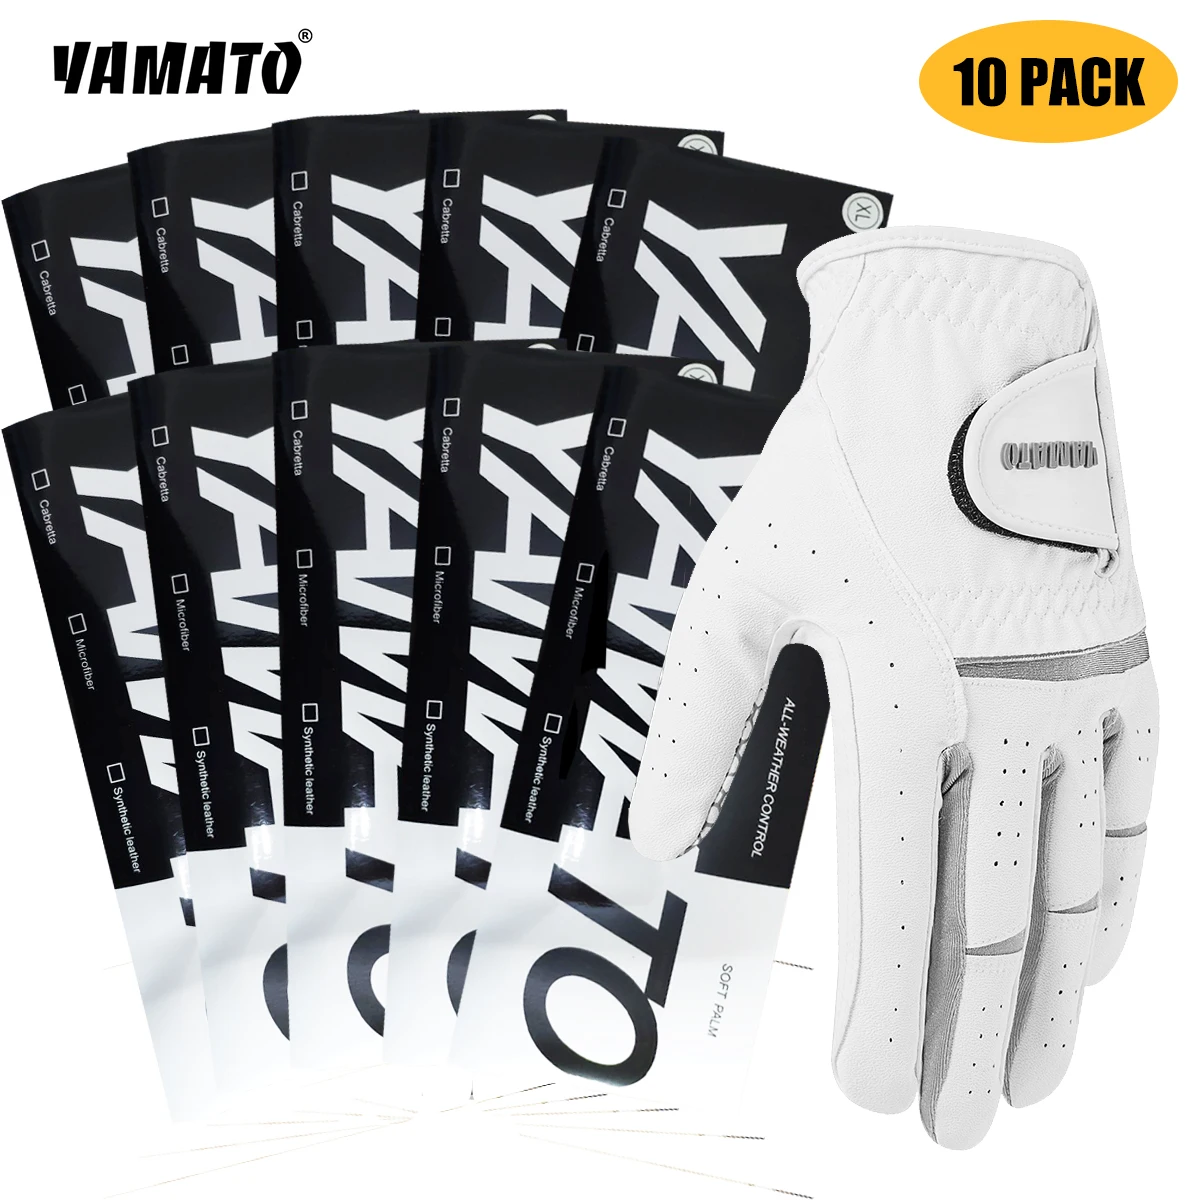 10 Pack YAMATO Soft Ultra-thin Breathable Premium Microfiber Left Hand Golf Gloves for Men